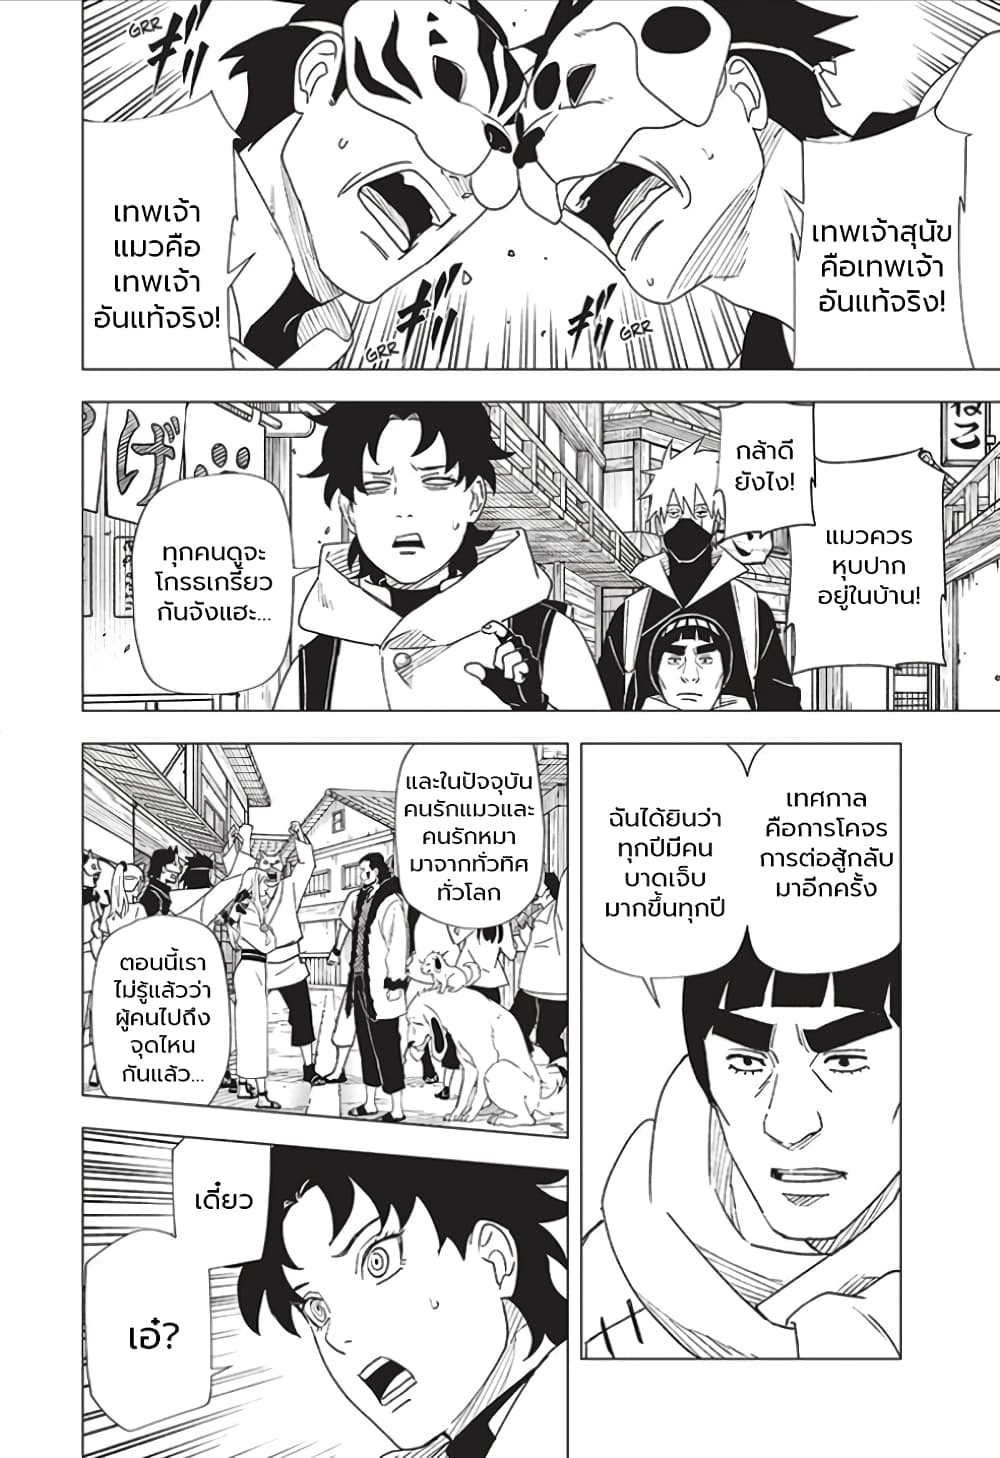 Naruto Konoha’s Story – The Steam Ninja Scrolls The Manga ตอนที่ 4 (22)